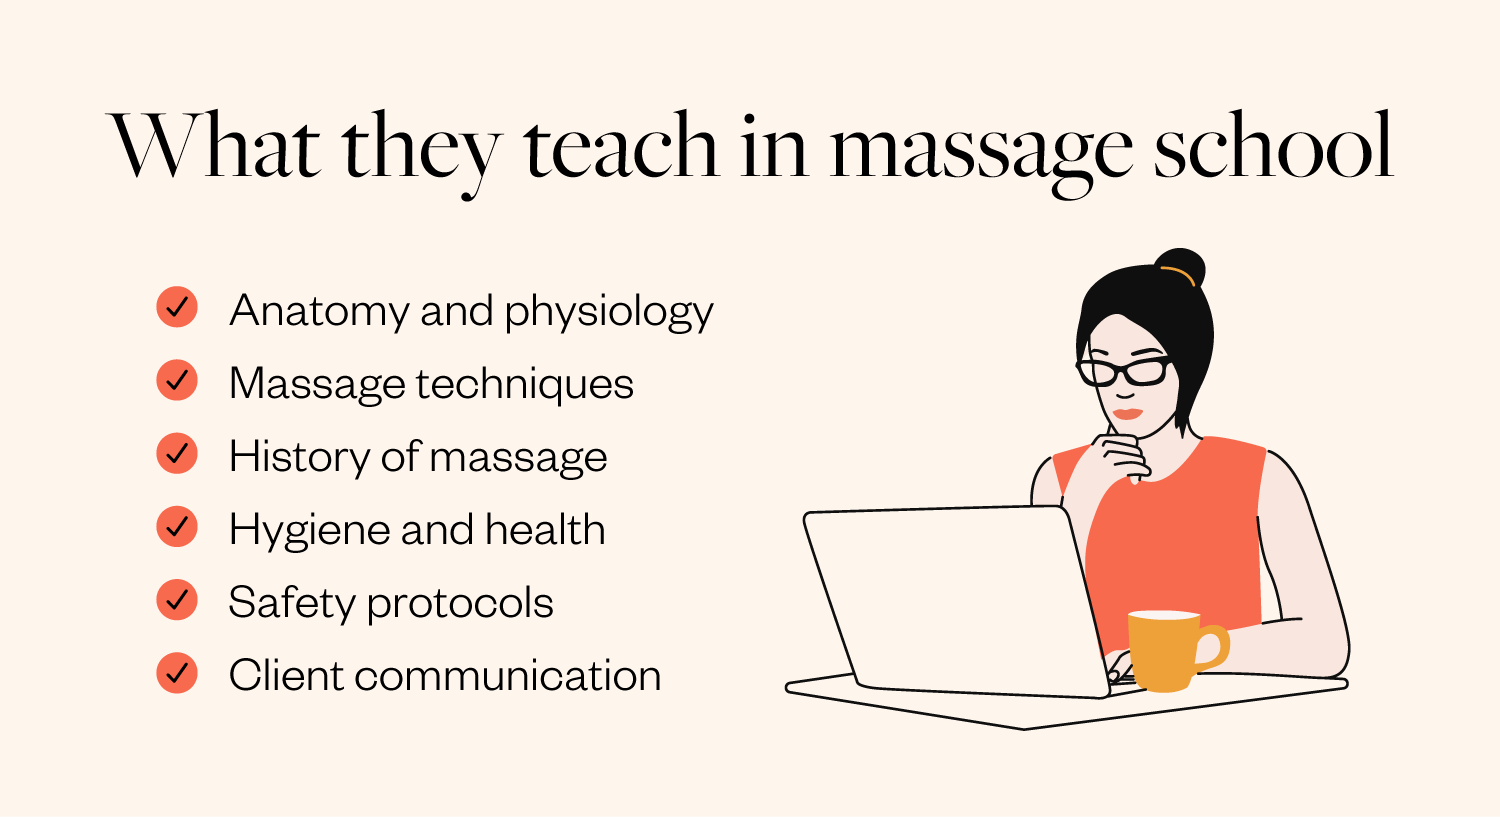 What they teach in massage school